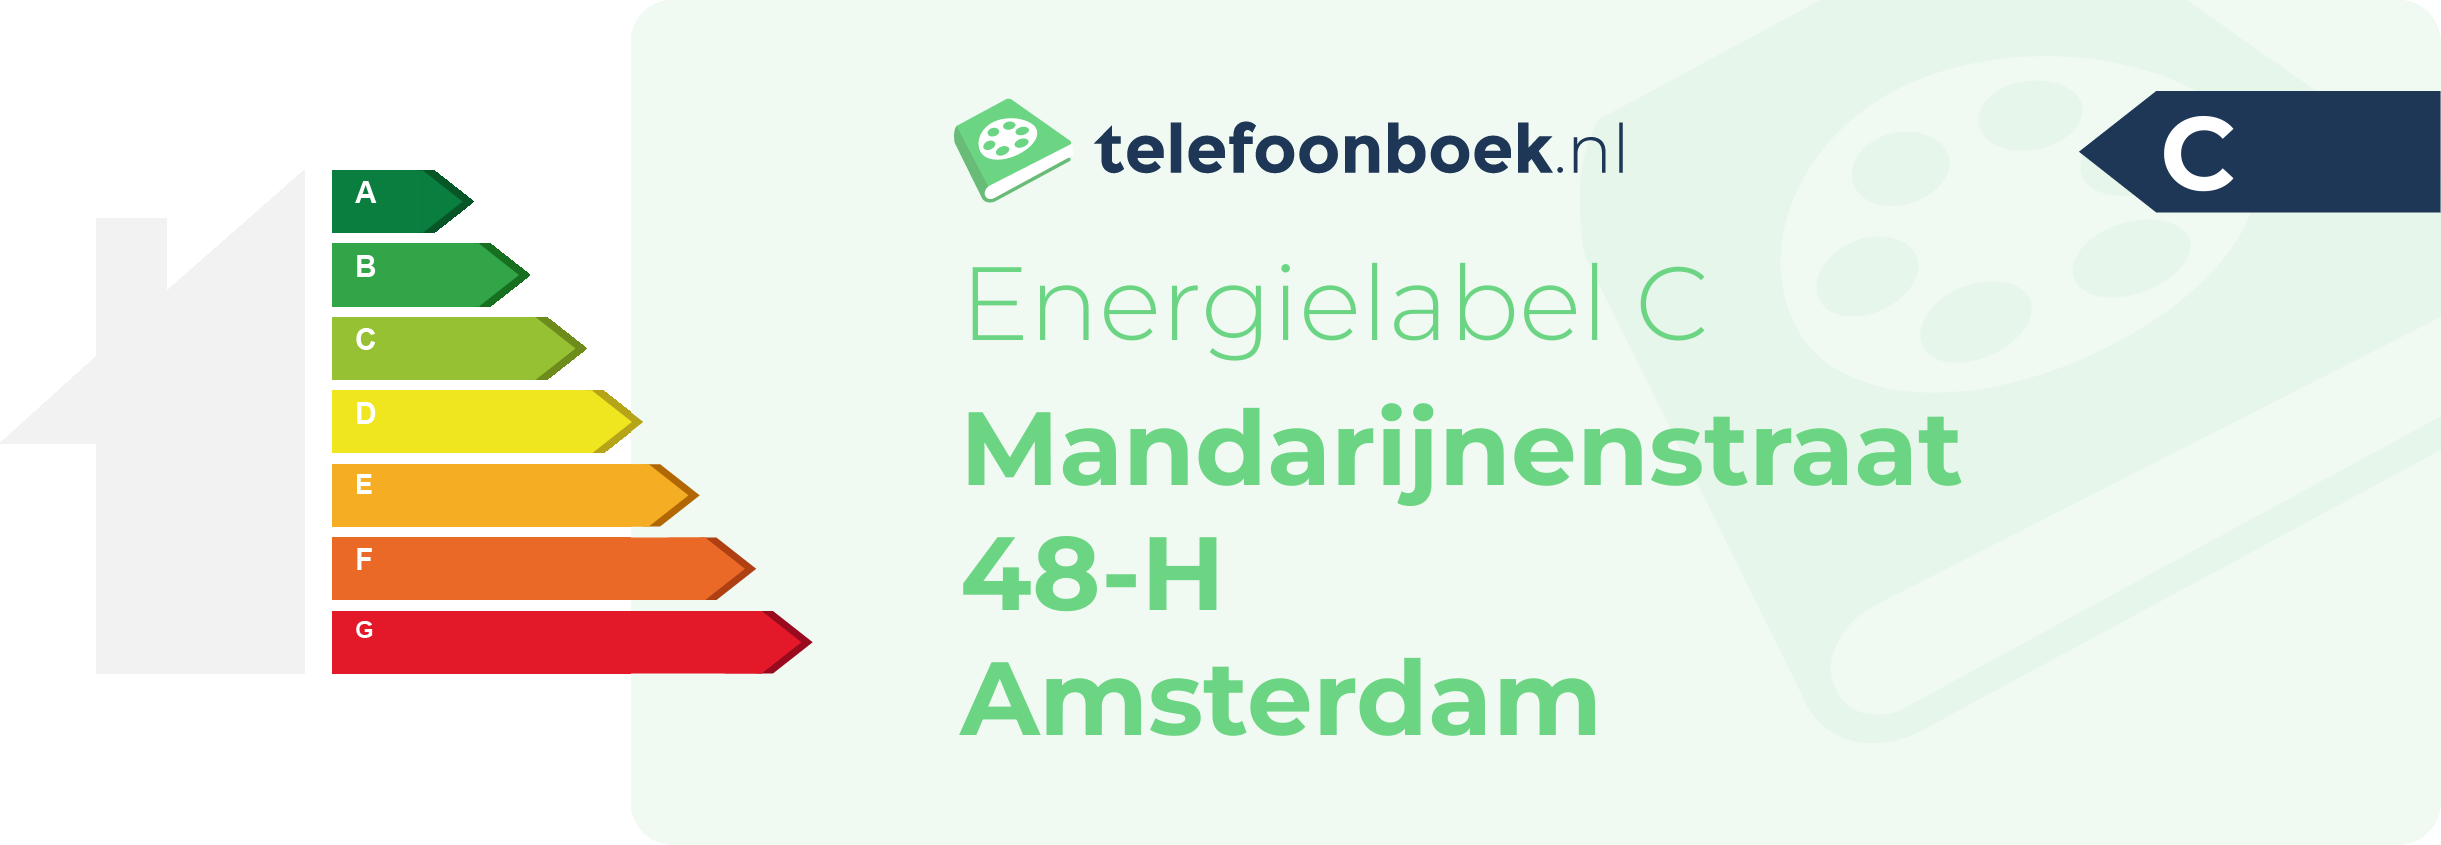 Energielabel Mandarijnenstraat 48-H Amsterdam